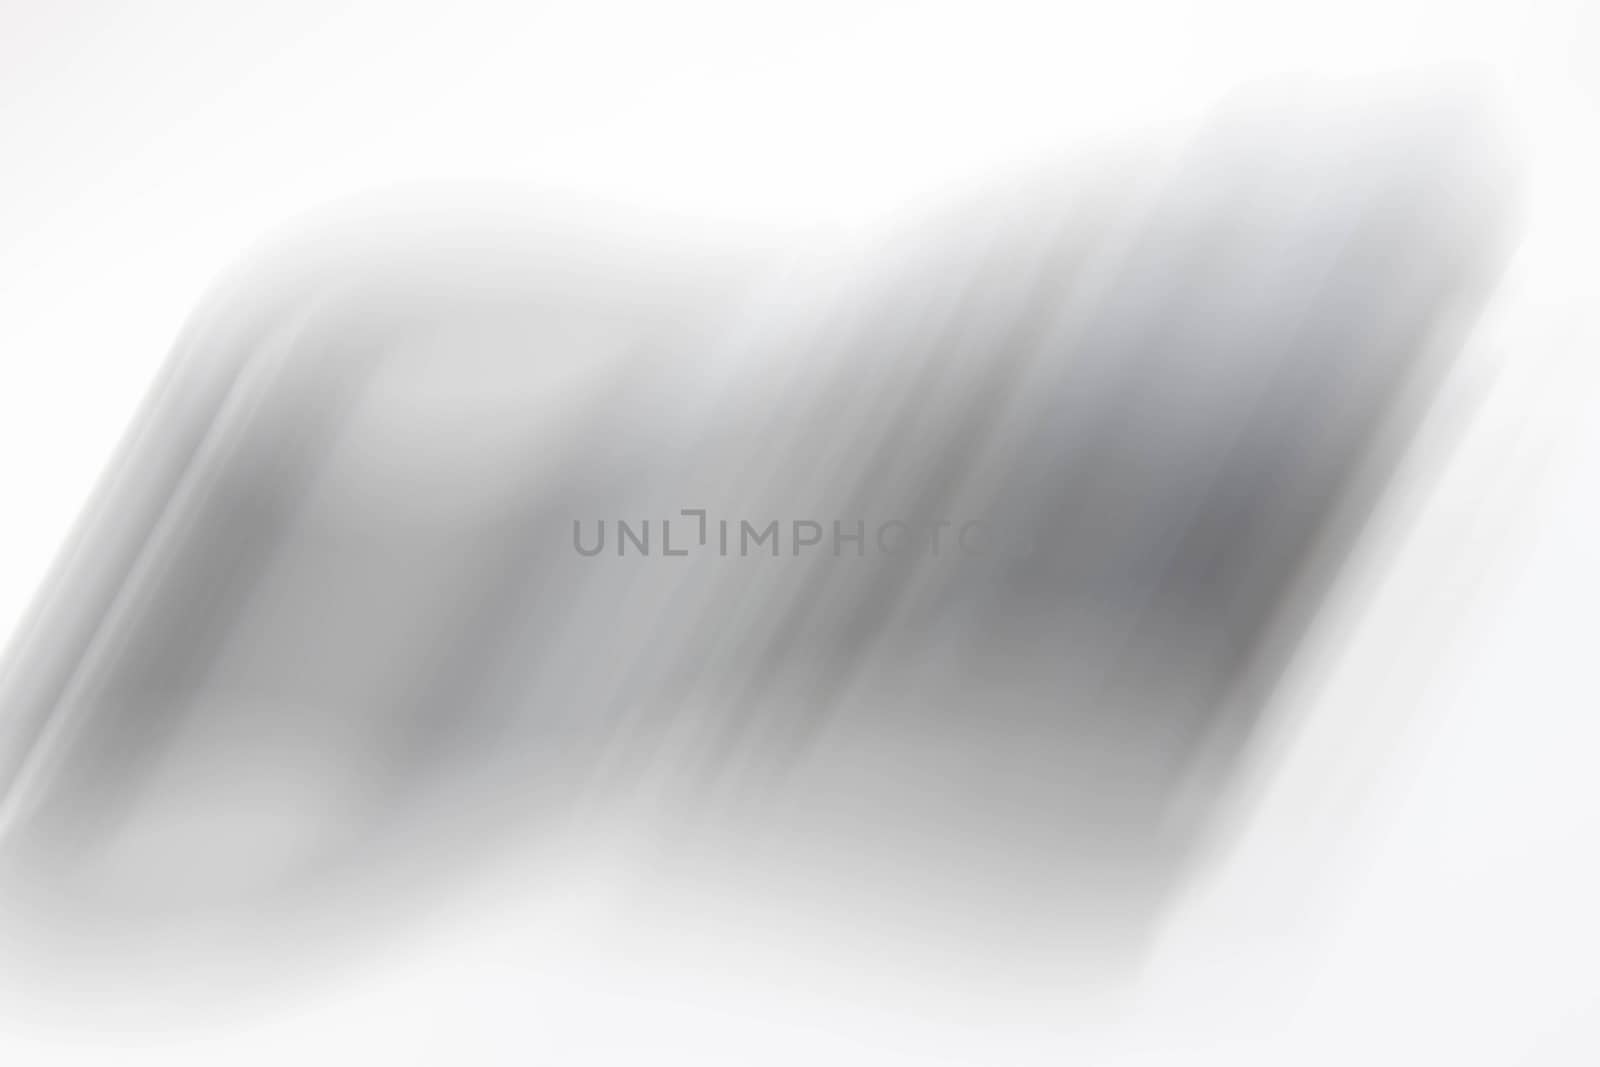 Motion blur white and black background. by primzrider